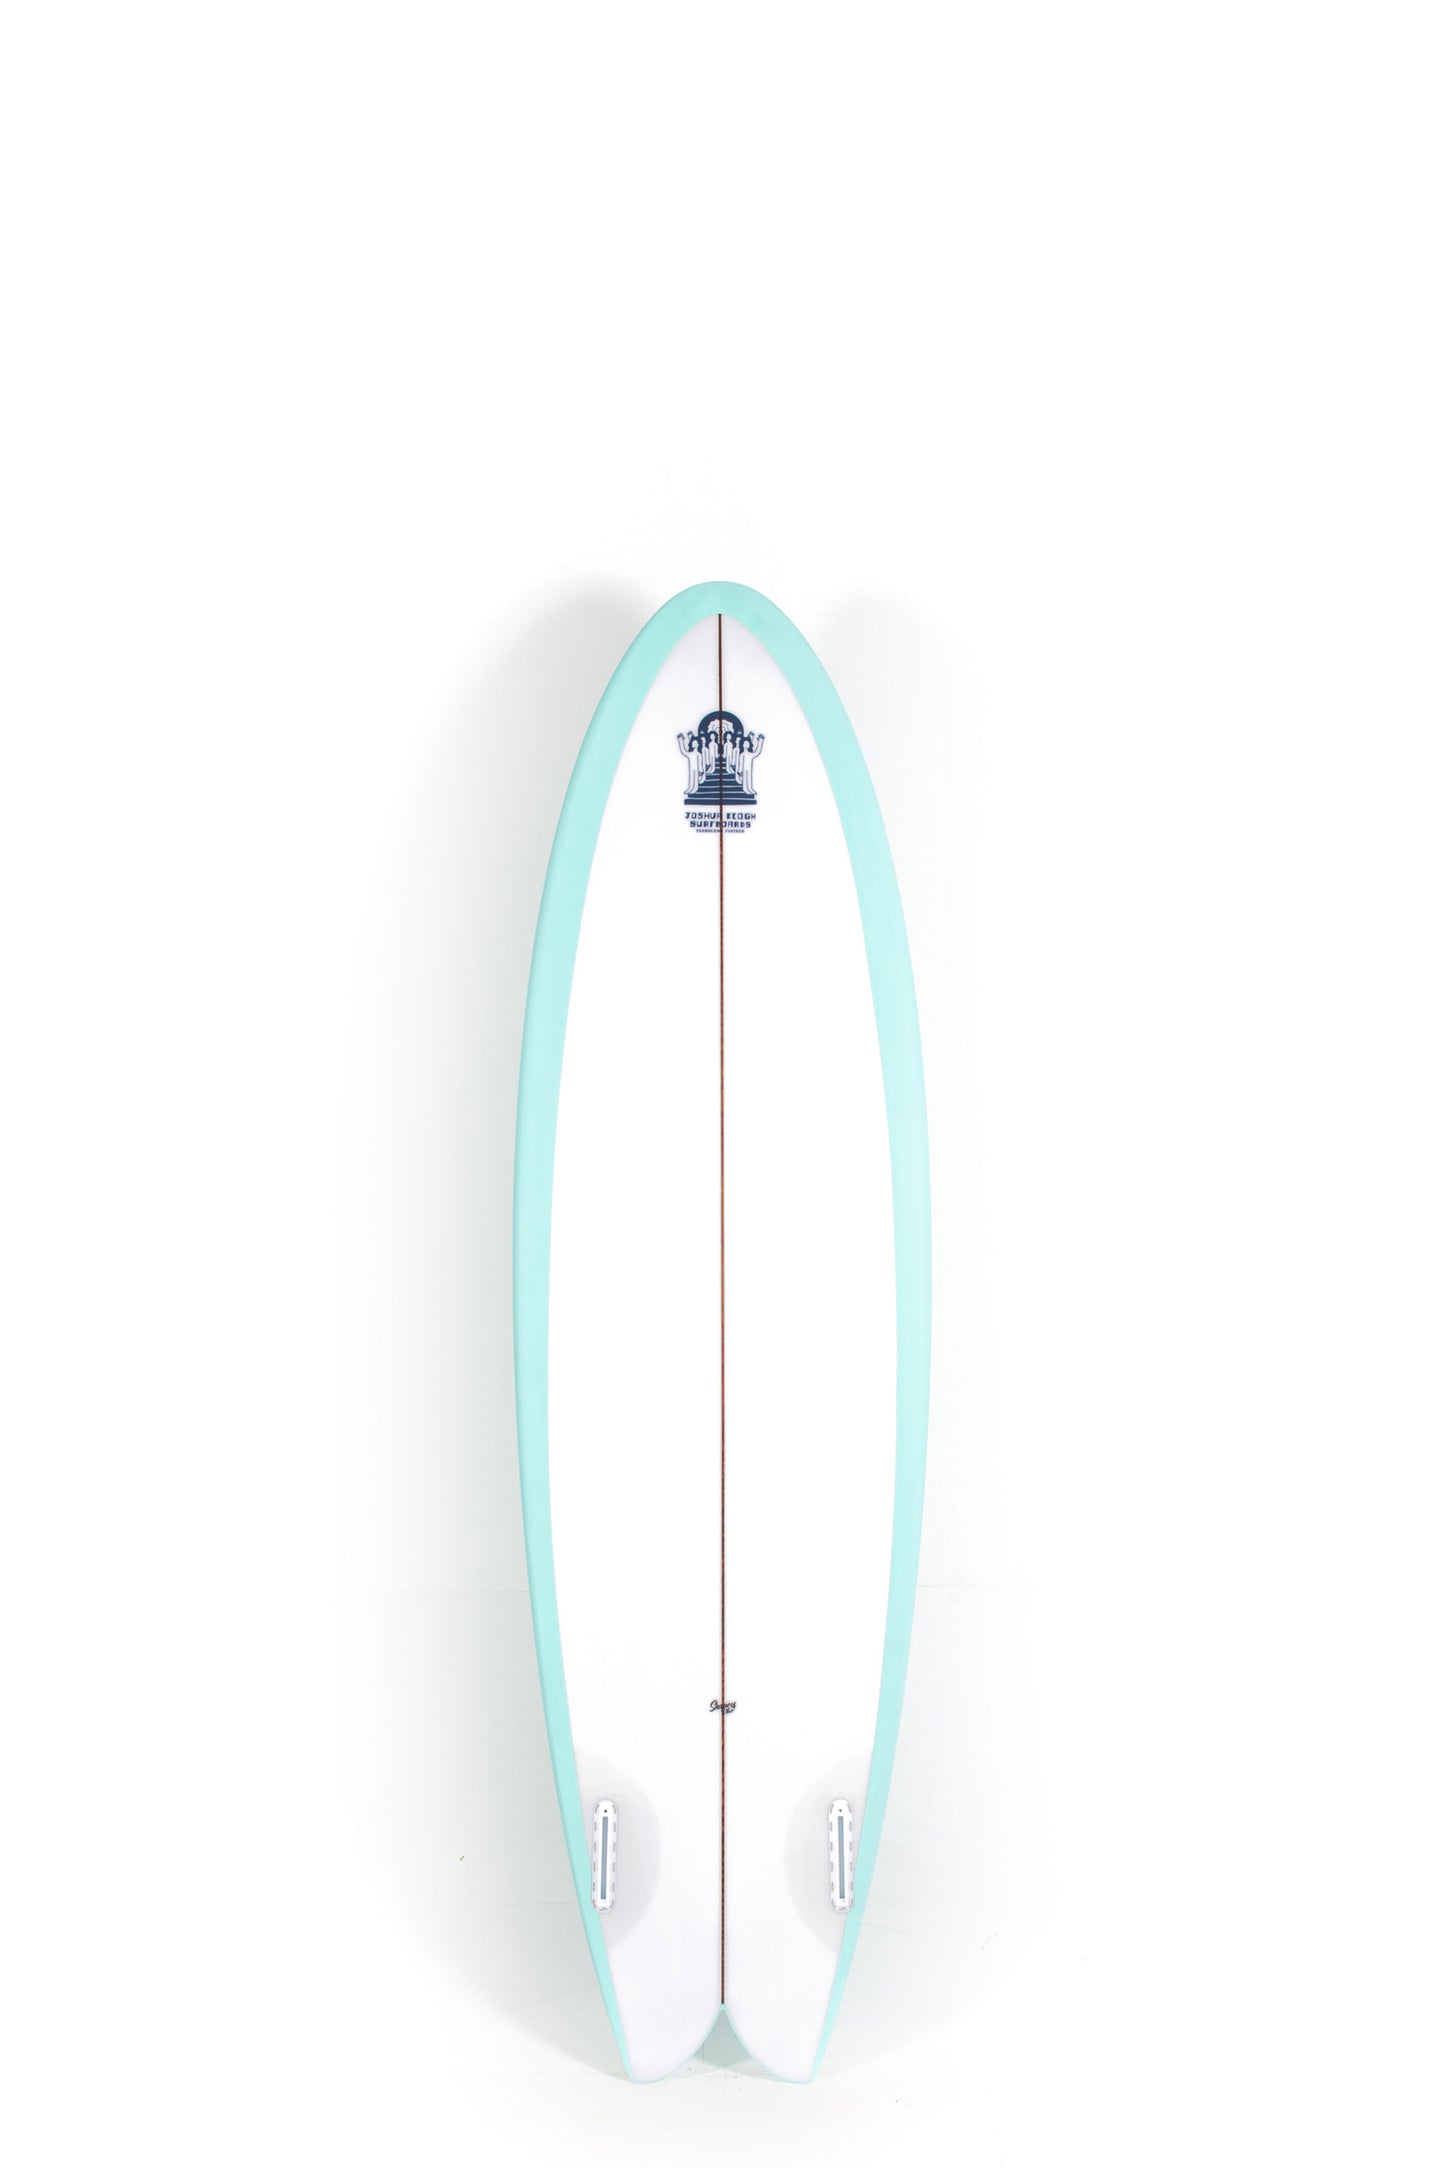 Pukas-Surf-Shop-Joshua-Keogh-Surfboards-M2-Joshua